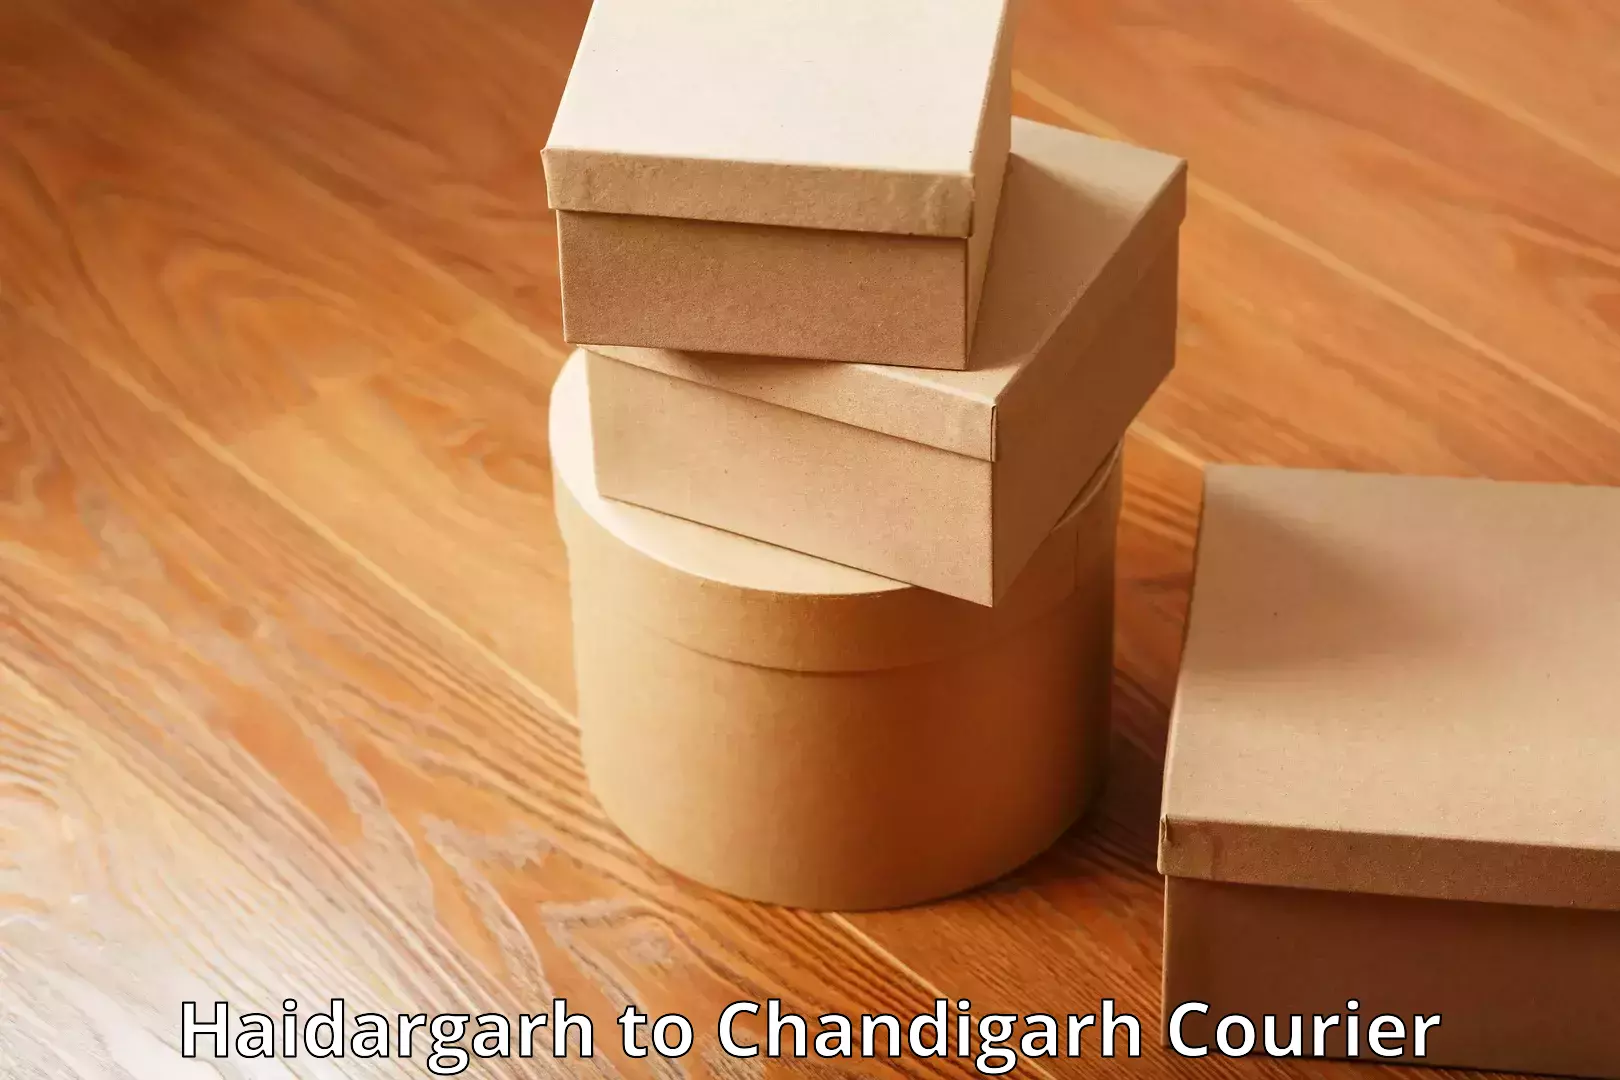 Baggage shipping experts Haidargarh to Chandigarh